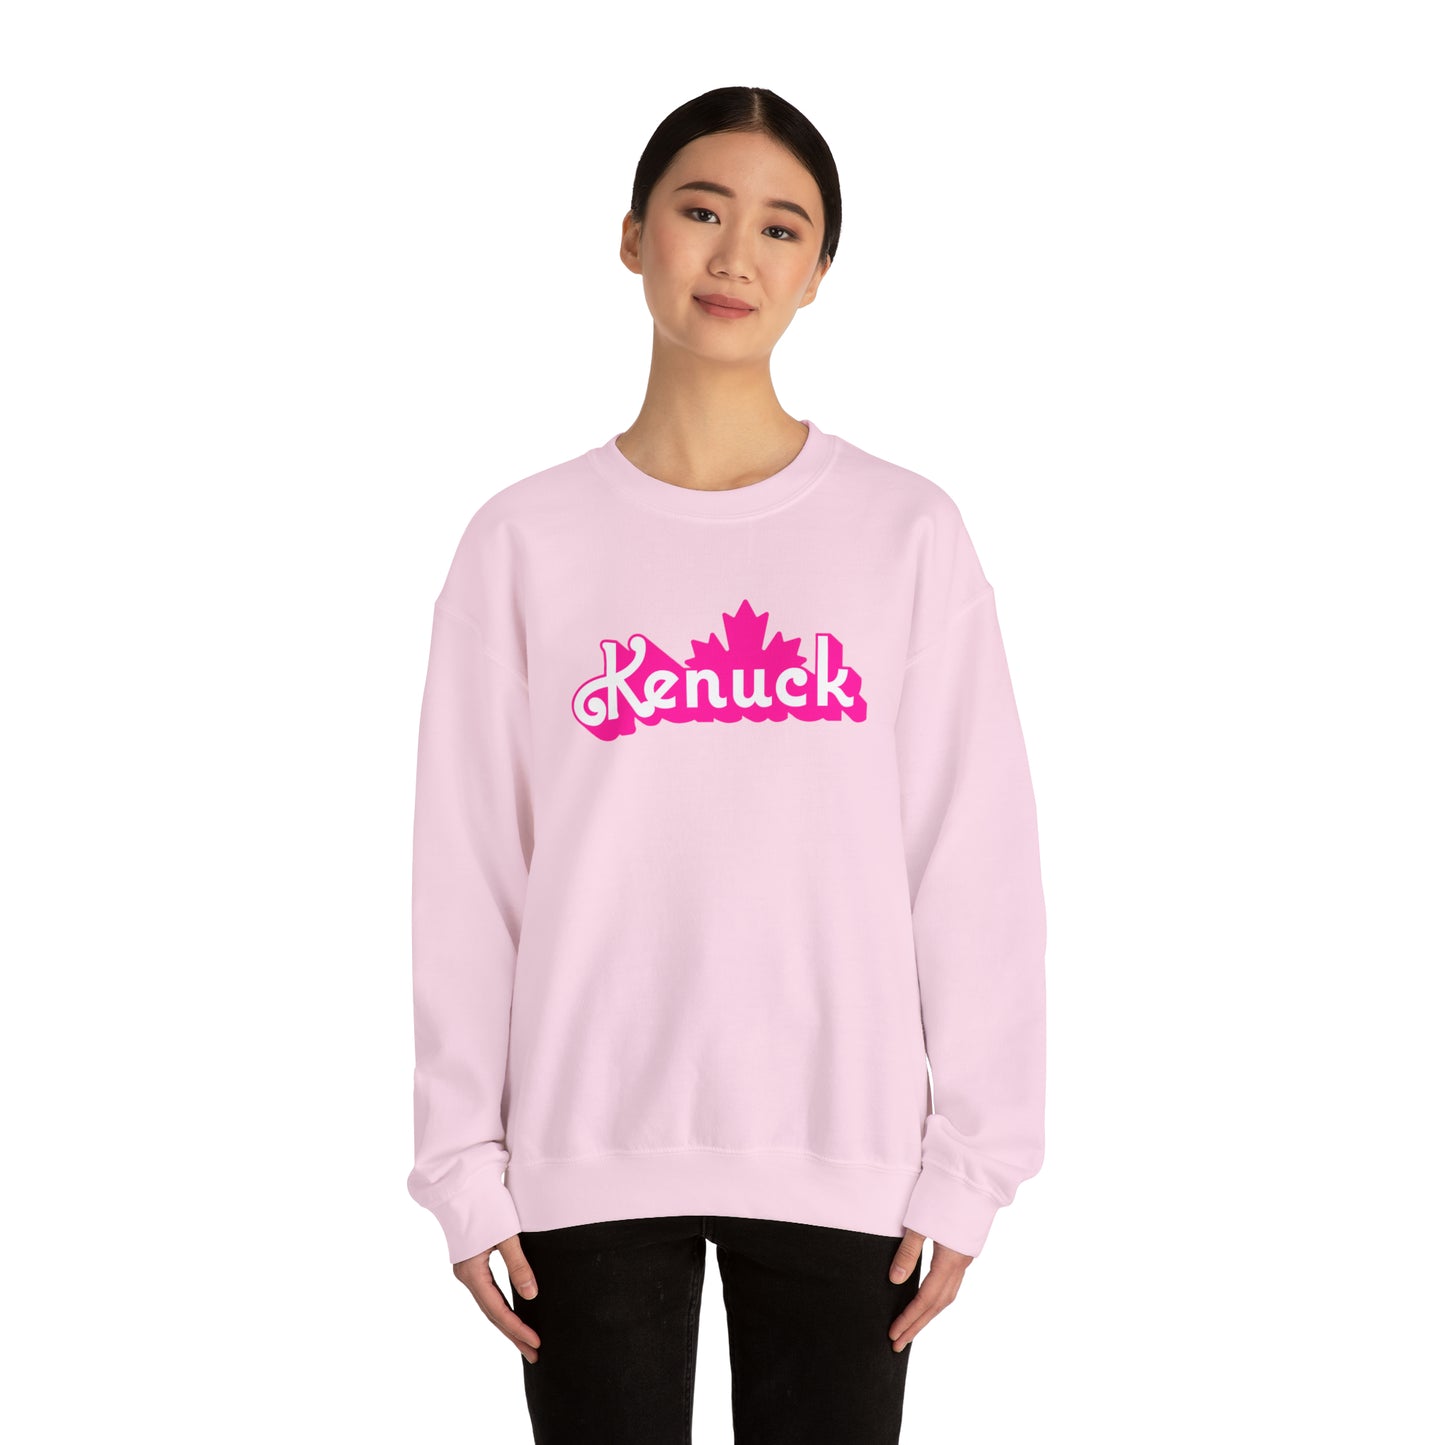 Kenuck Crewneck Sweatshirt